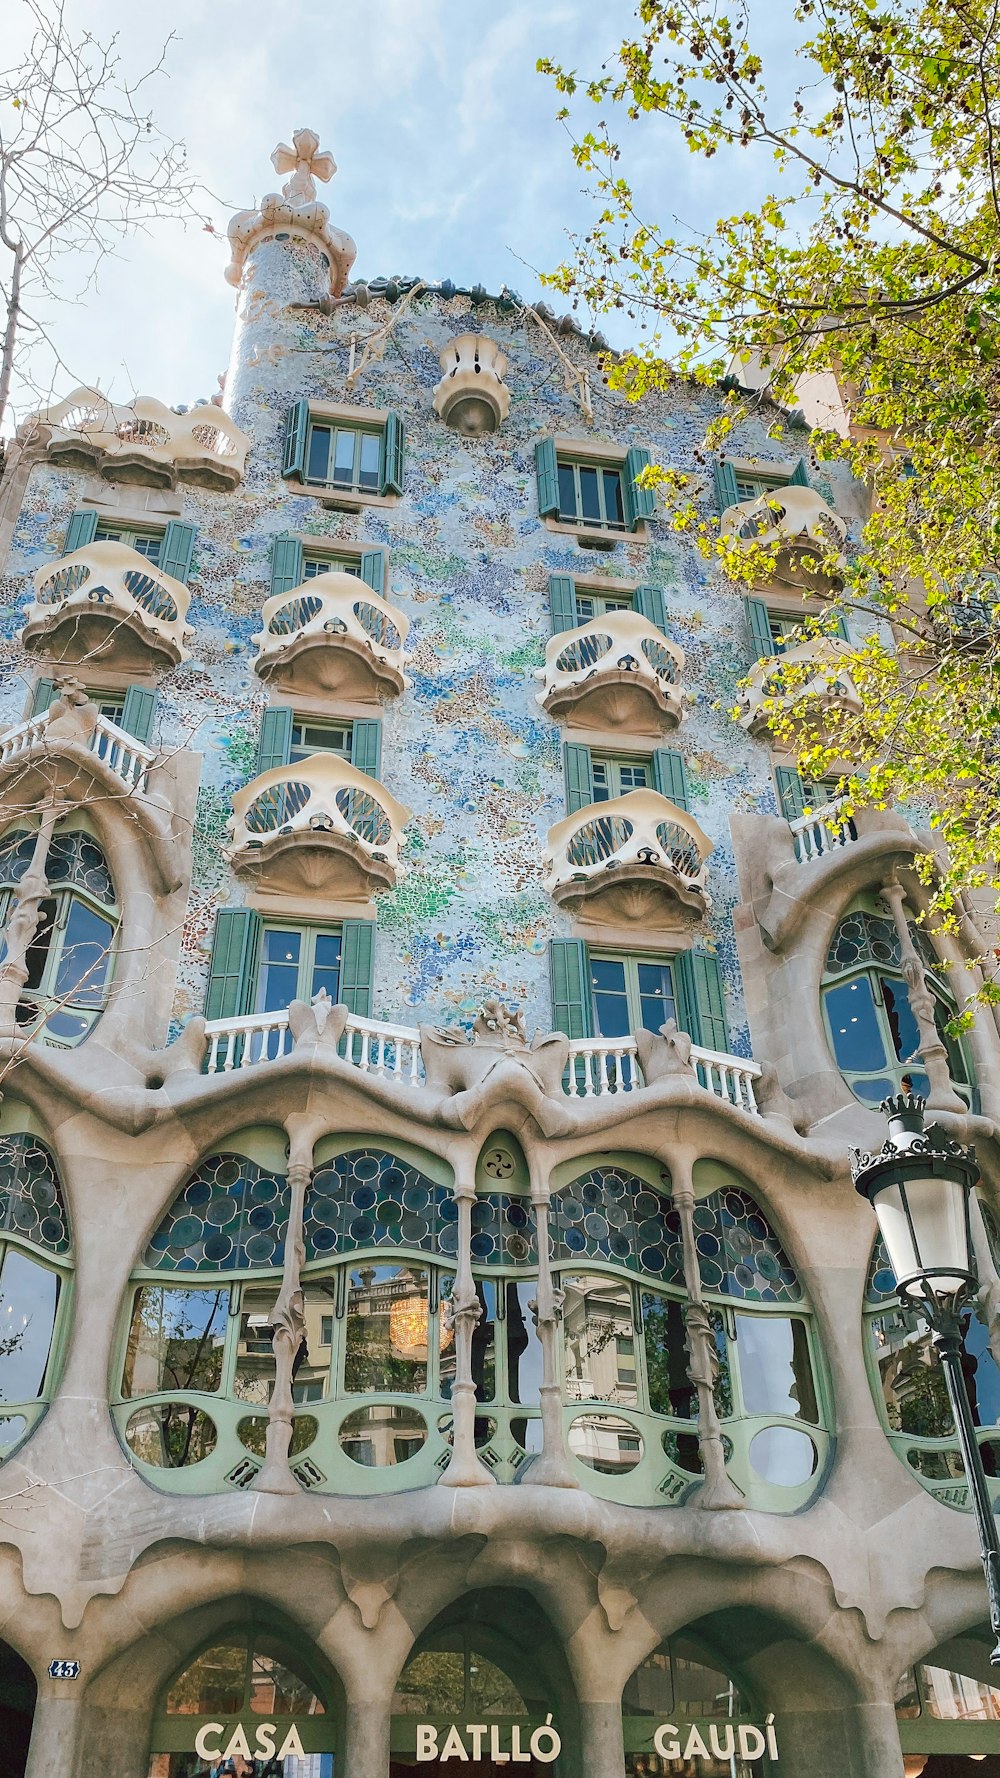 Casa Batlló with many windows